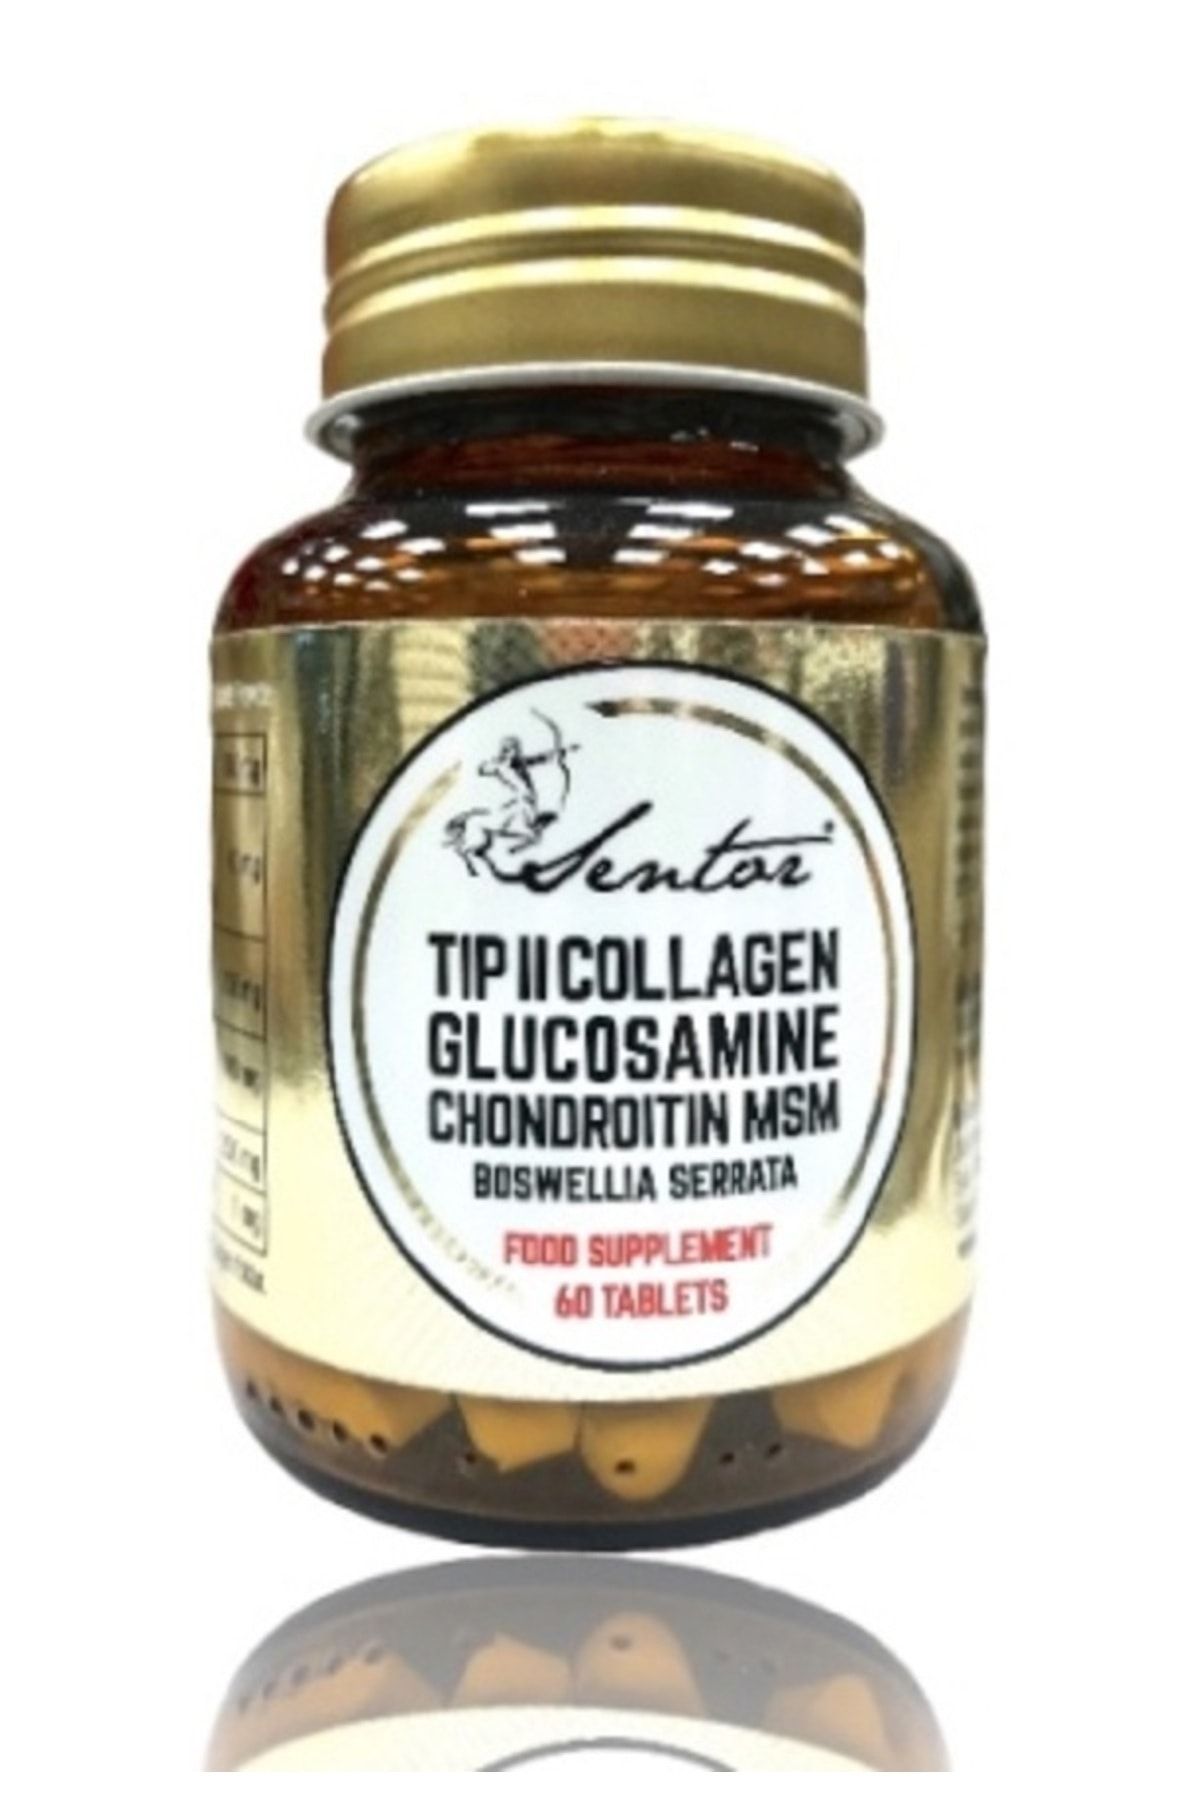 Sentor Tip II Collagen, Glucosamine, Chondroitin MSM, Boswellia 60 Tablet